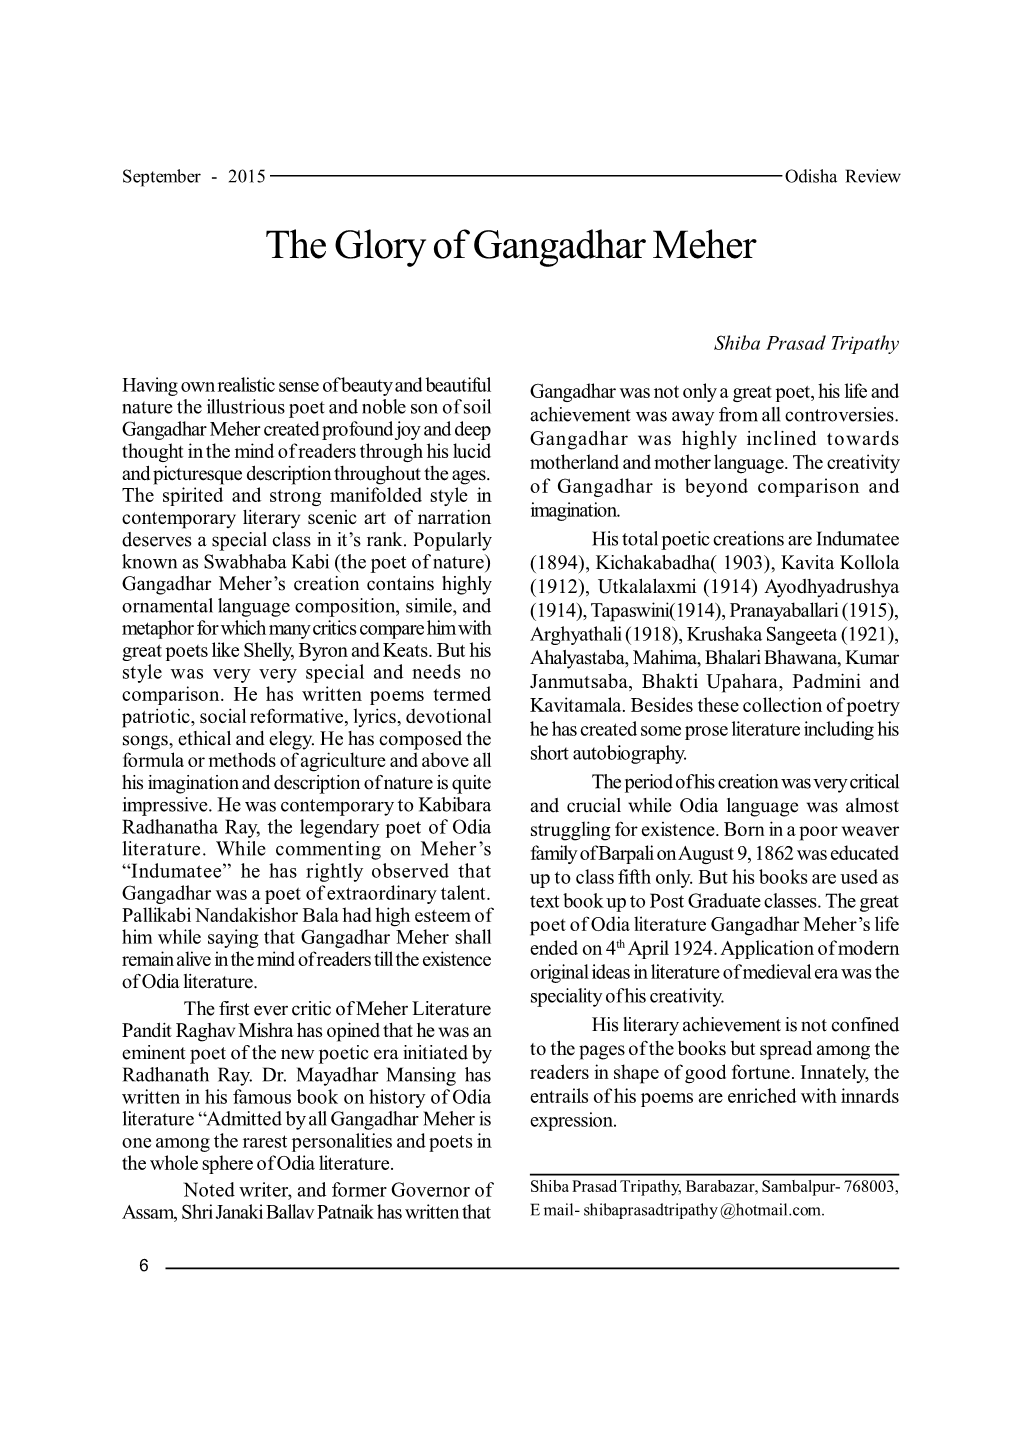 The Glory of Gangadhar Meher